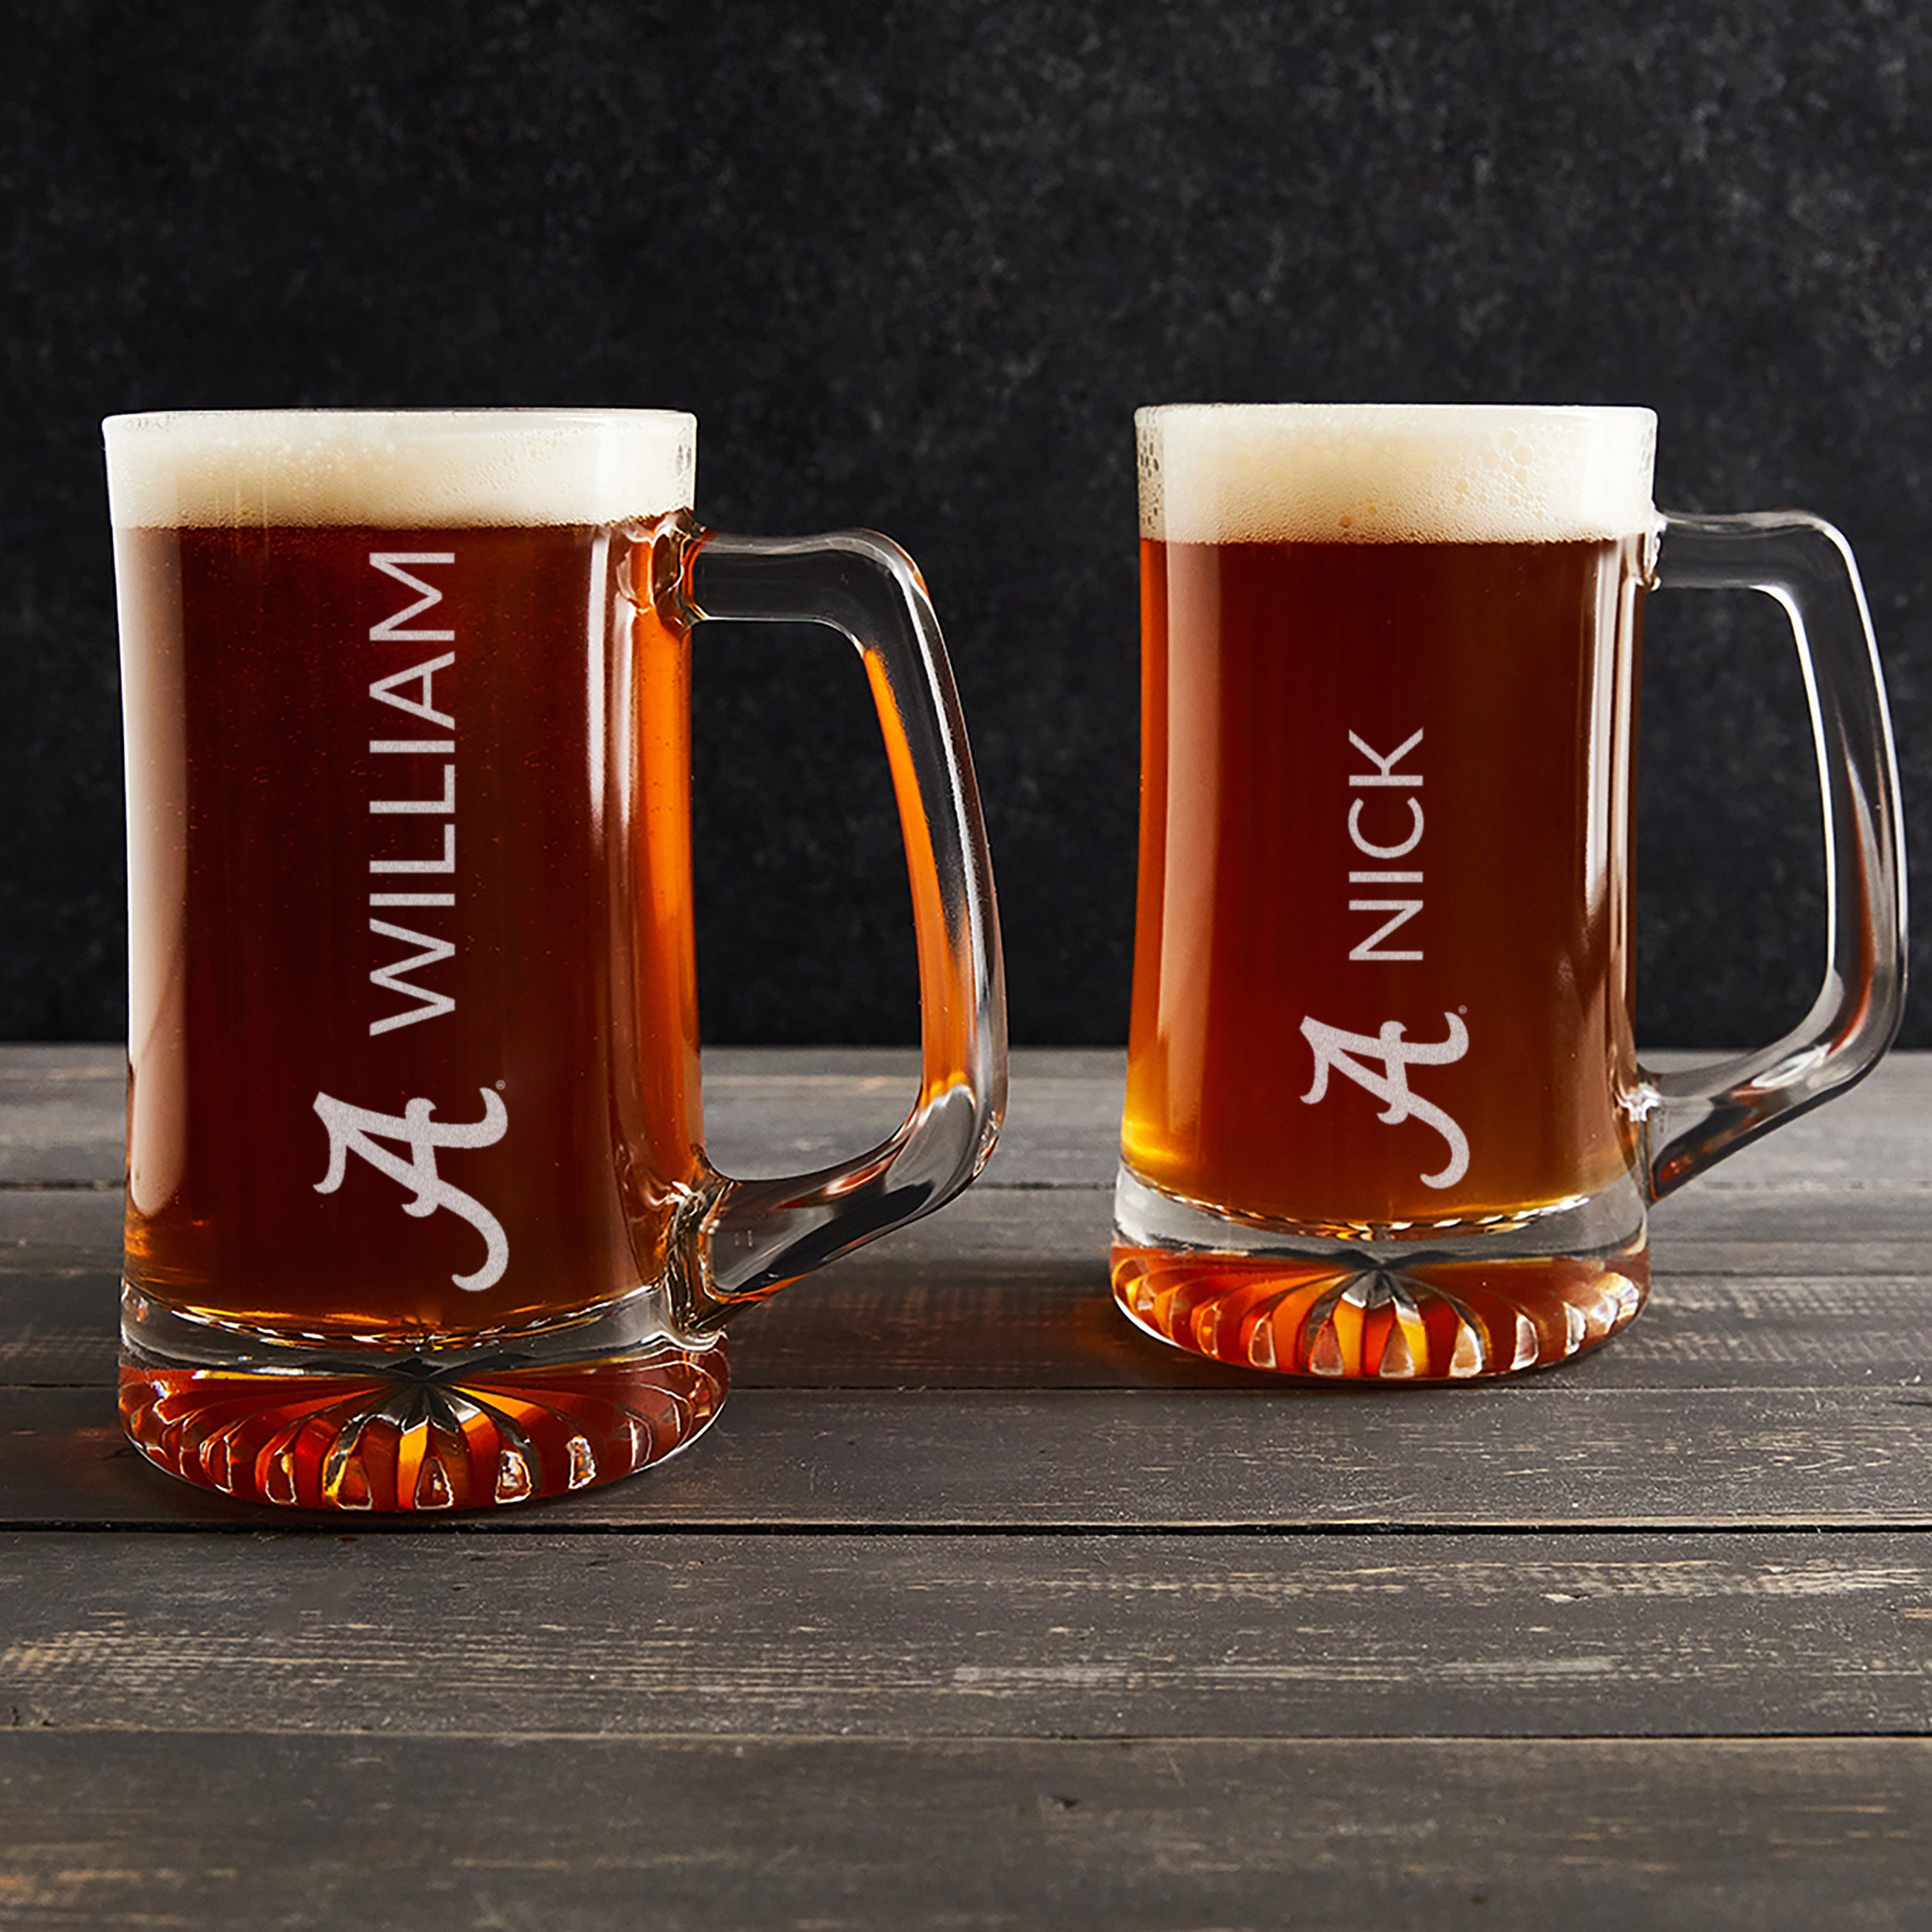 NCAA Alabama Crimson Tide Personalized Coffee Mug 15oz White  Alabama  crimson tide, Personalized coffee mugs, Alabama crimson